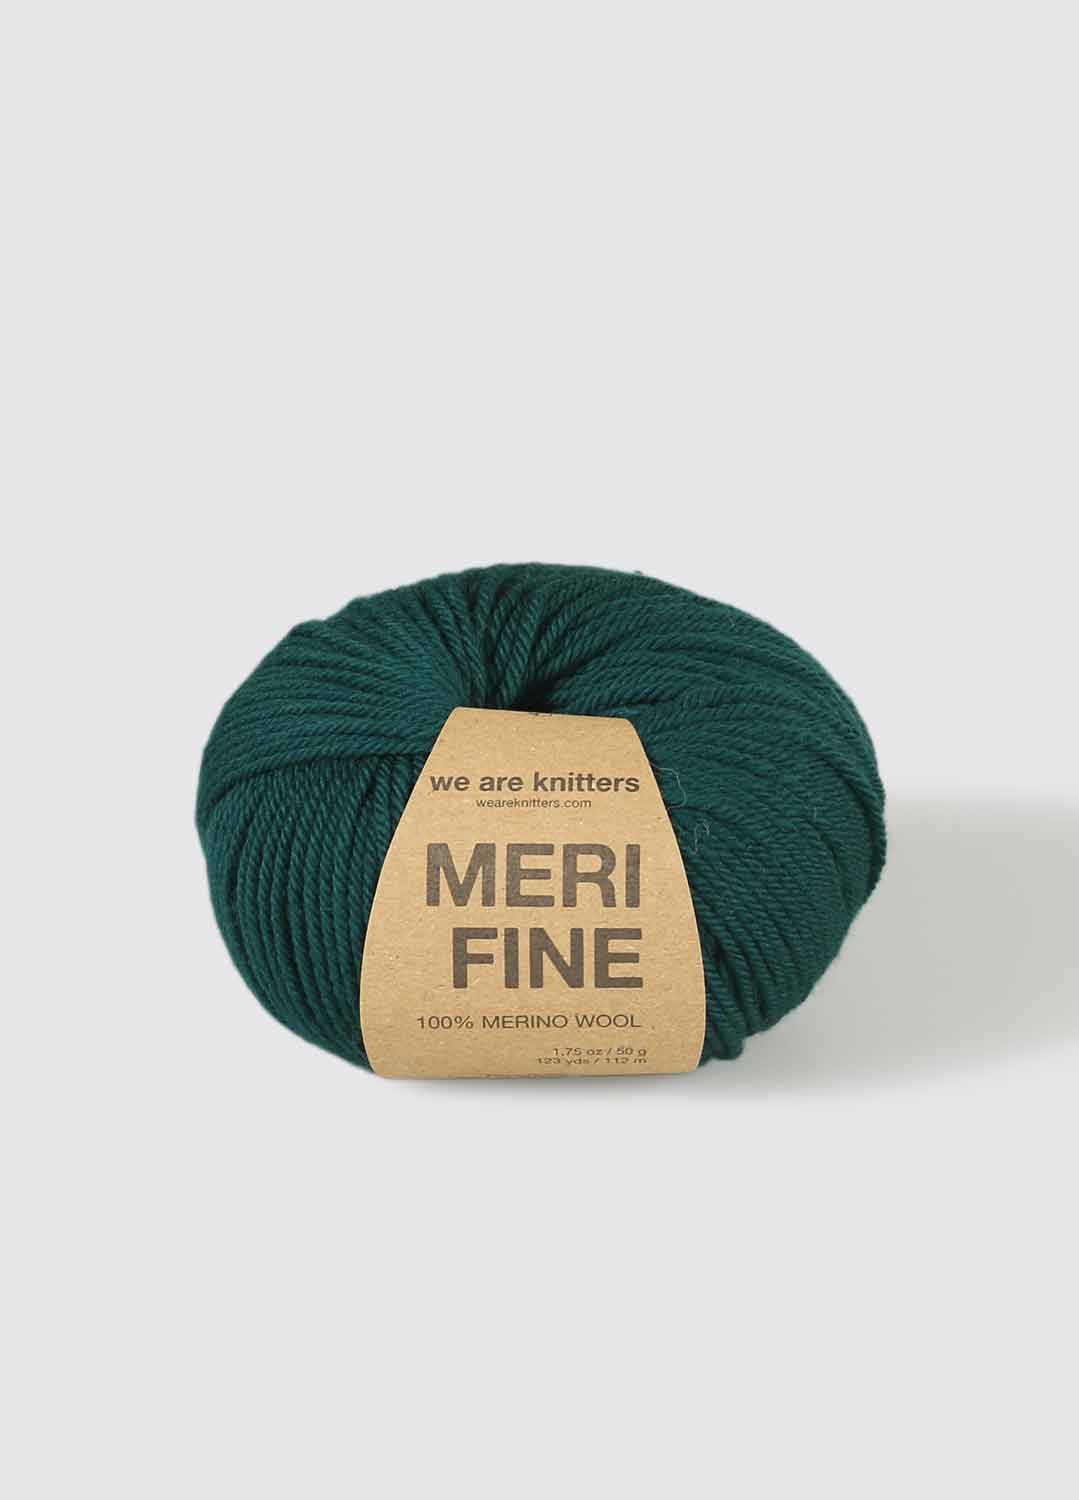 50+20 g/set Fine Yarn Crochet Cashmere Yarn for Knitting Sweater Cardigan  For Men